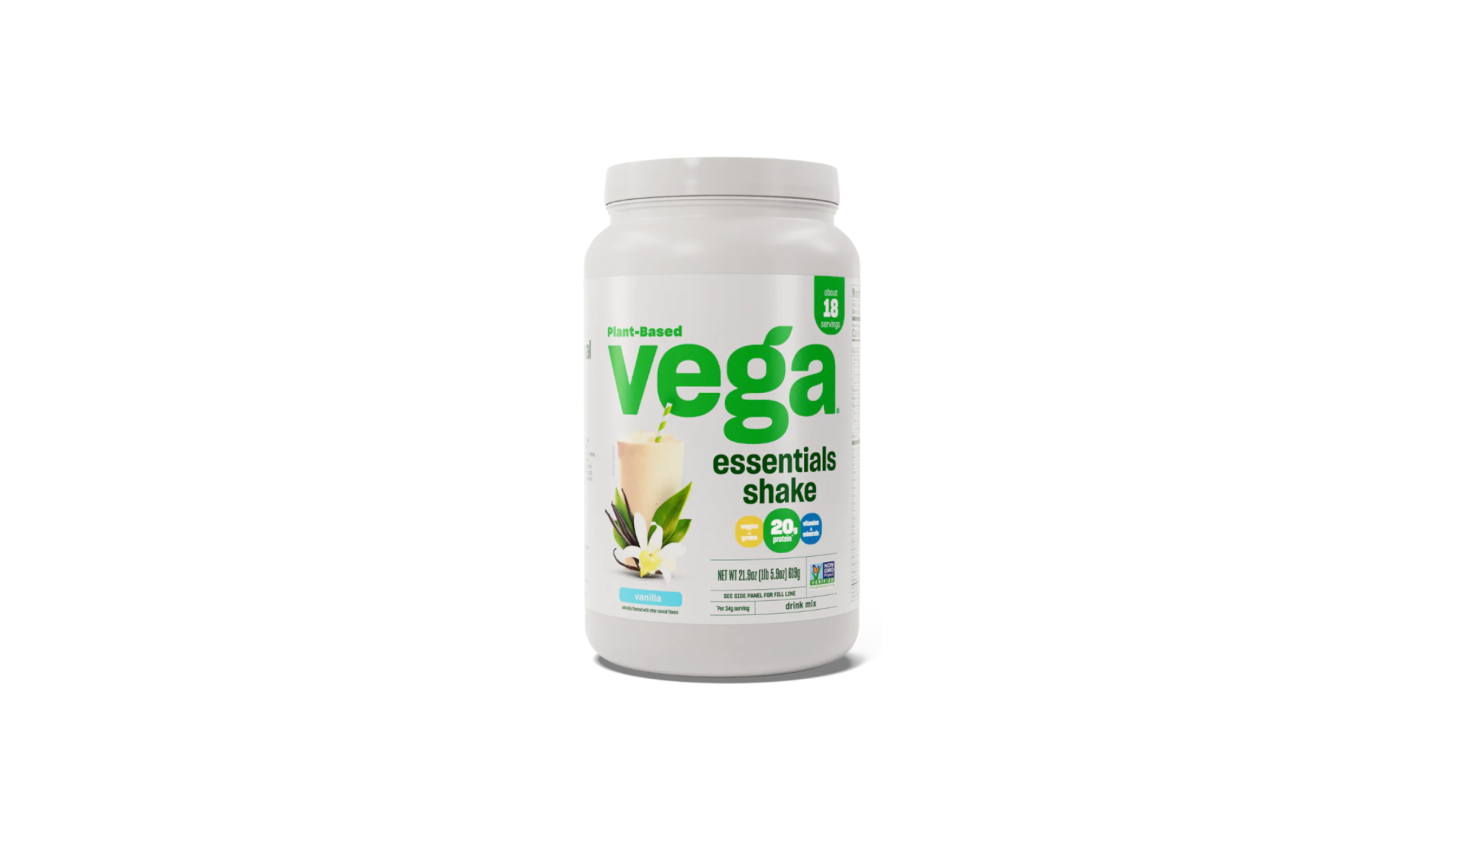 Vega Original Protein Powder